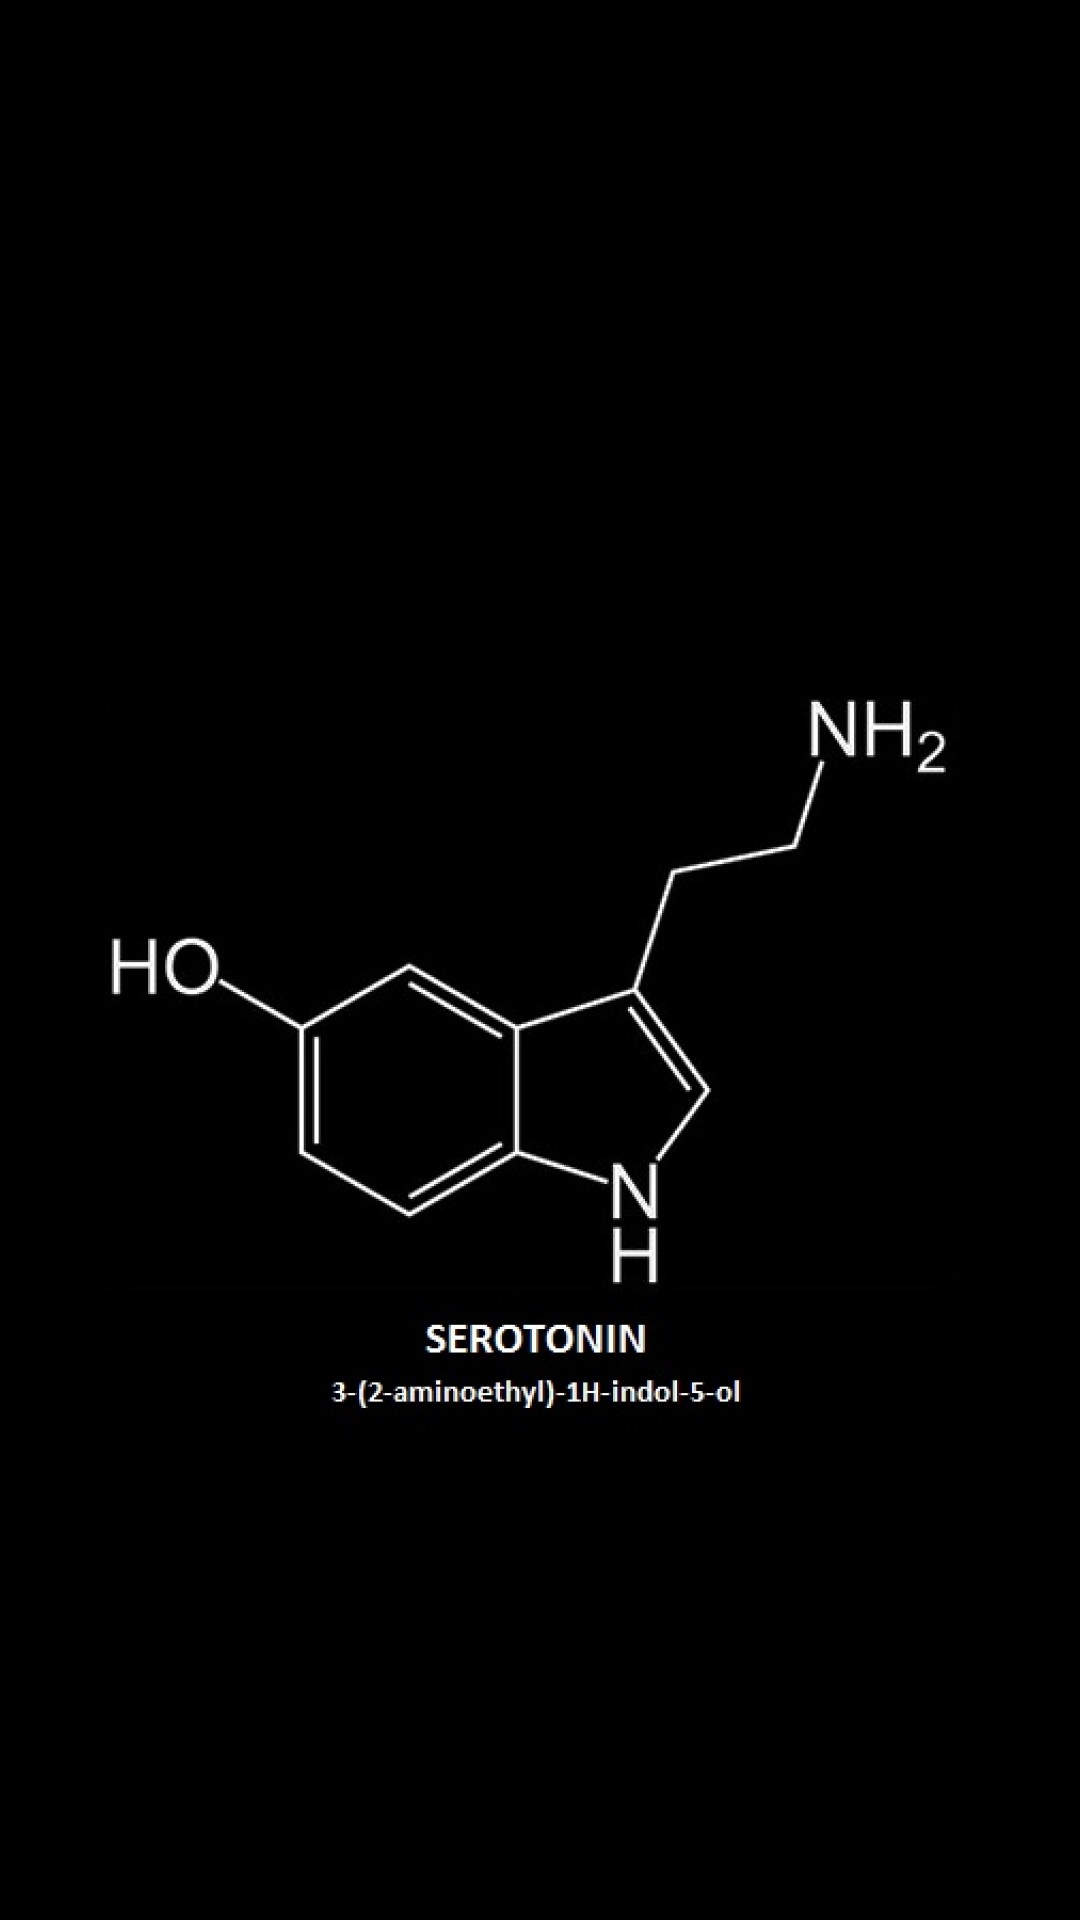 Serotonin HD Wallpaper iPhone 6s Plus